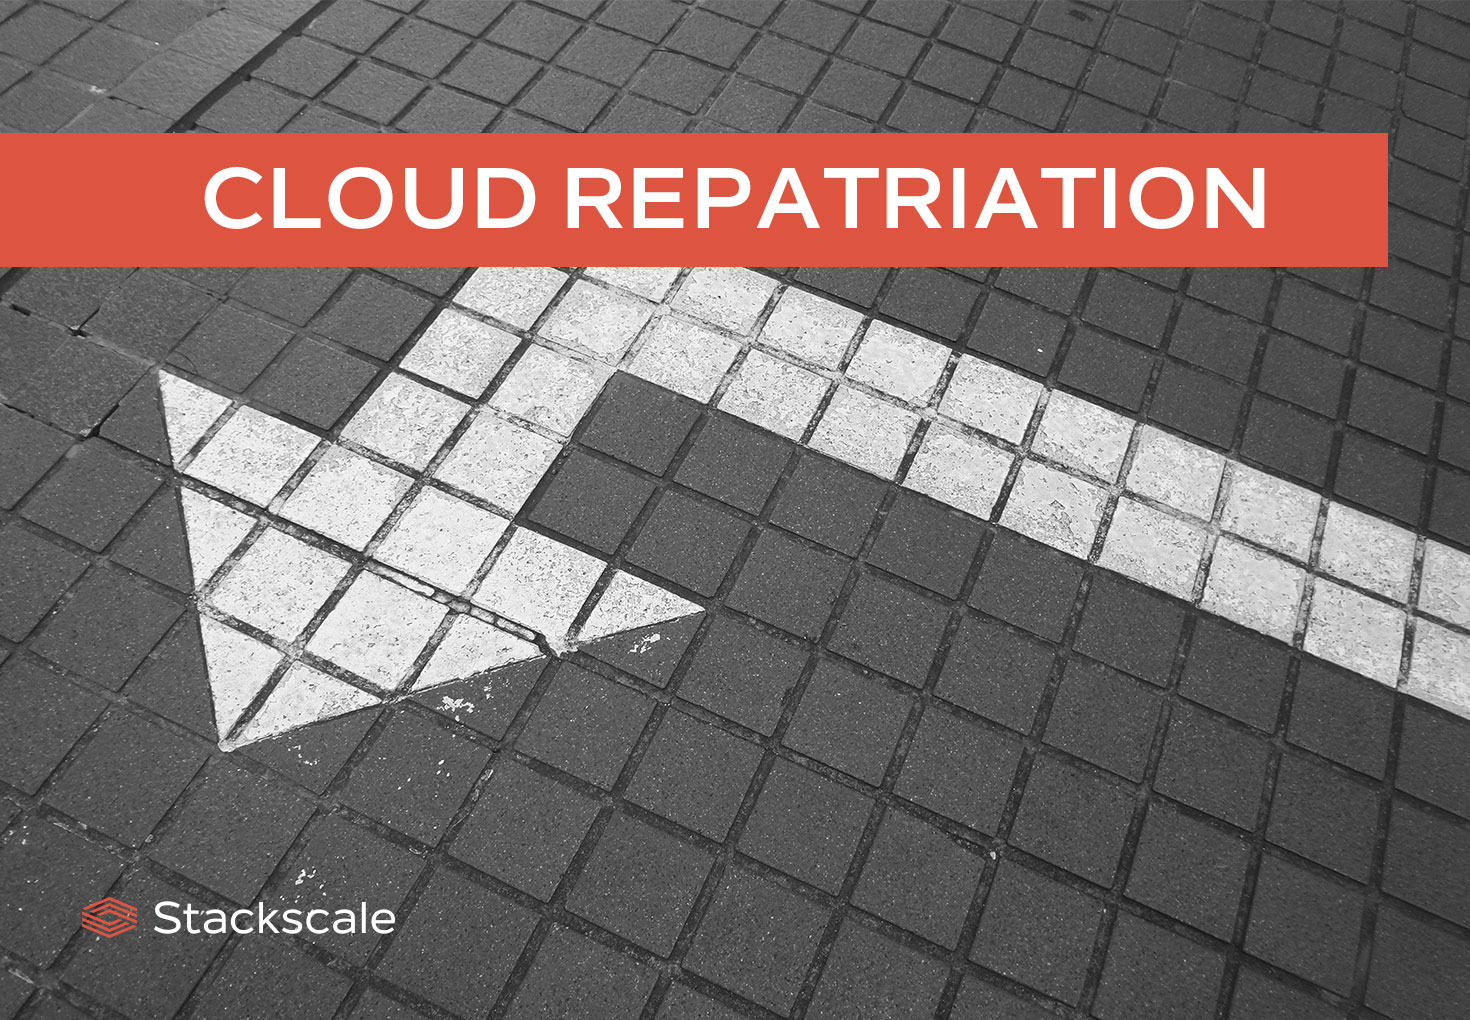 Cloud repatriation